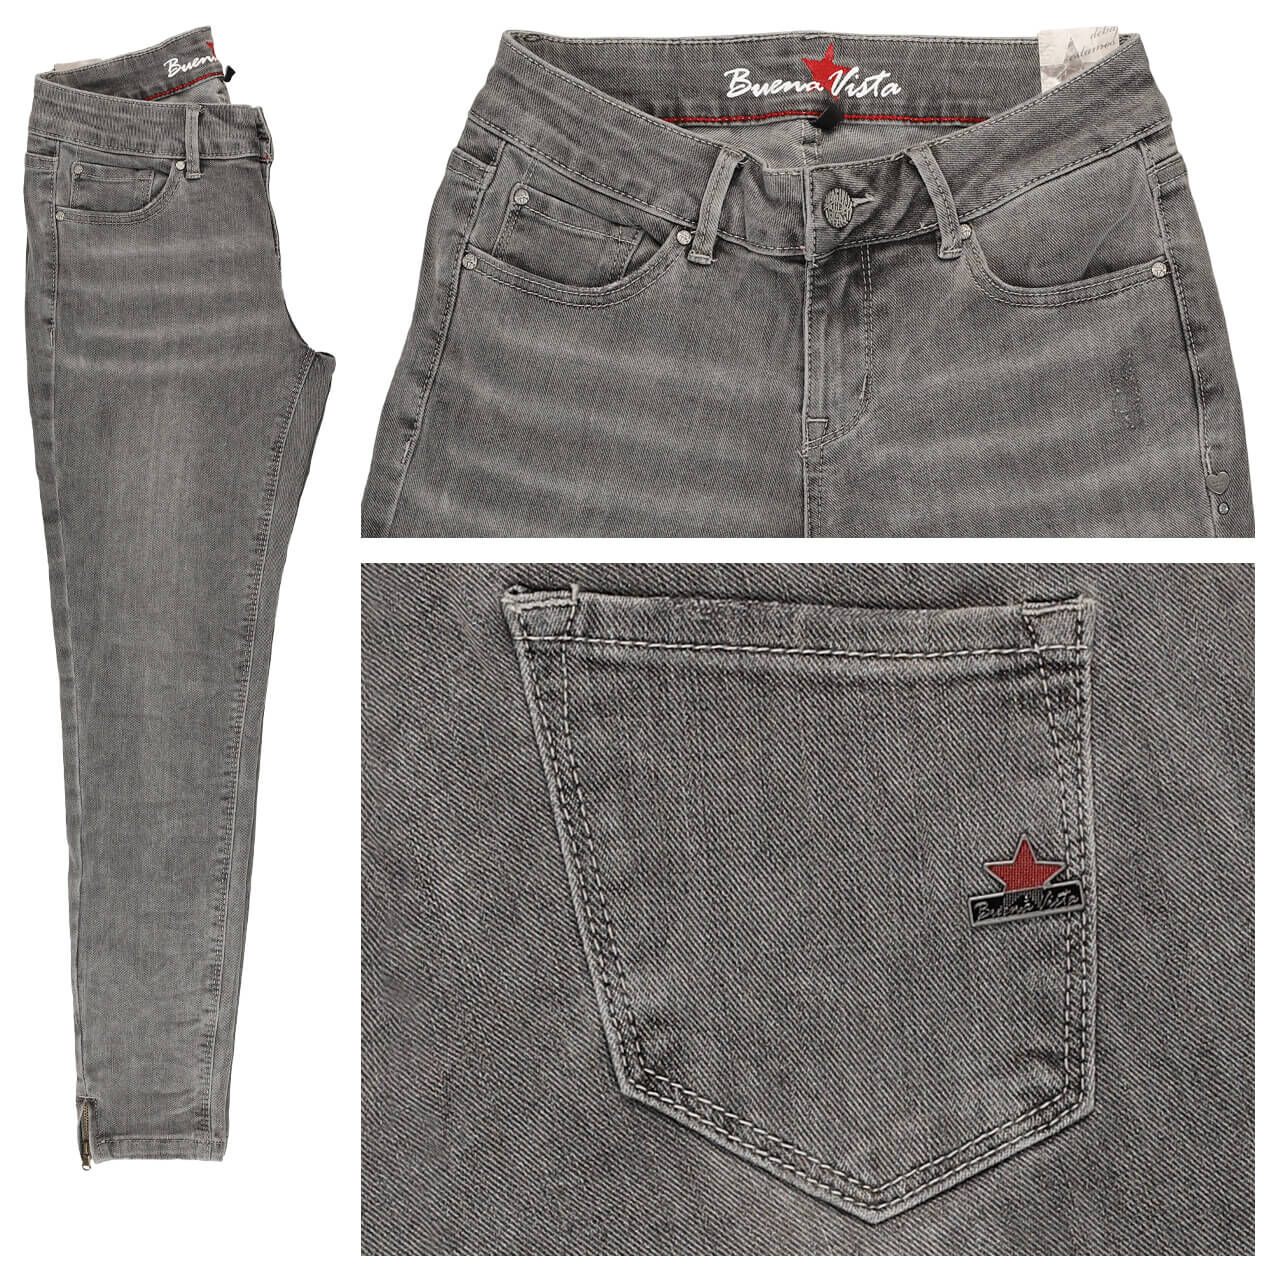 Buena Vista Italy V 7/8 Stretch Denim Jeans faded grey